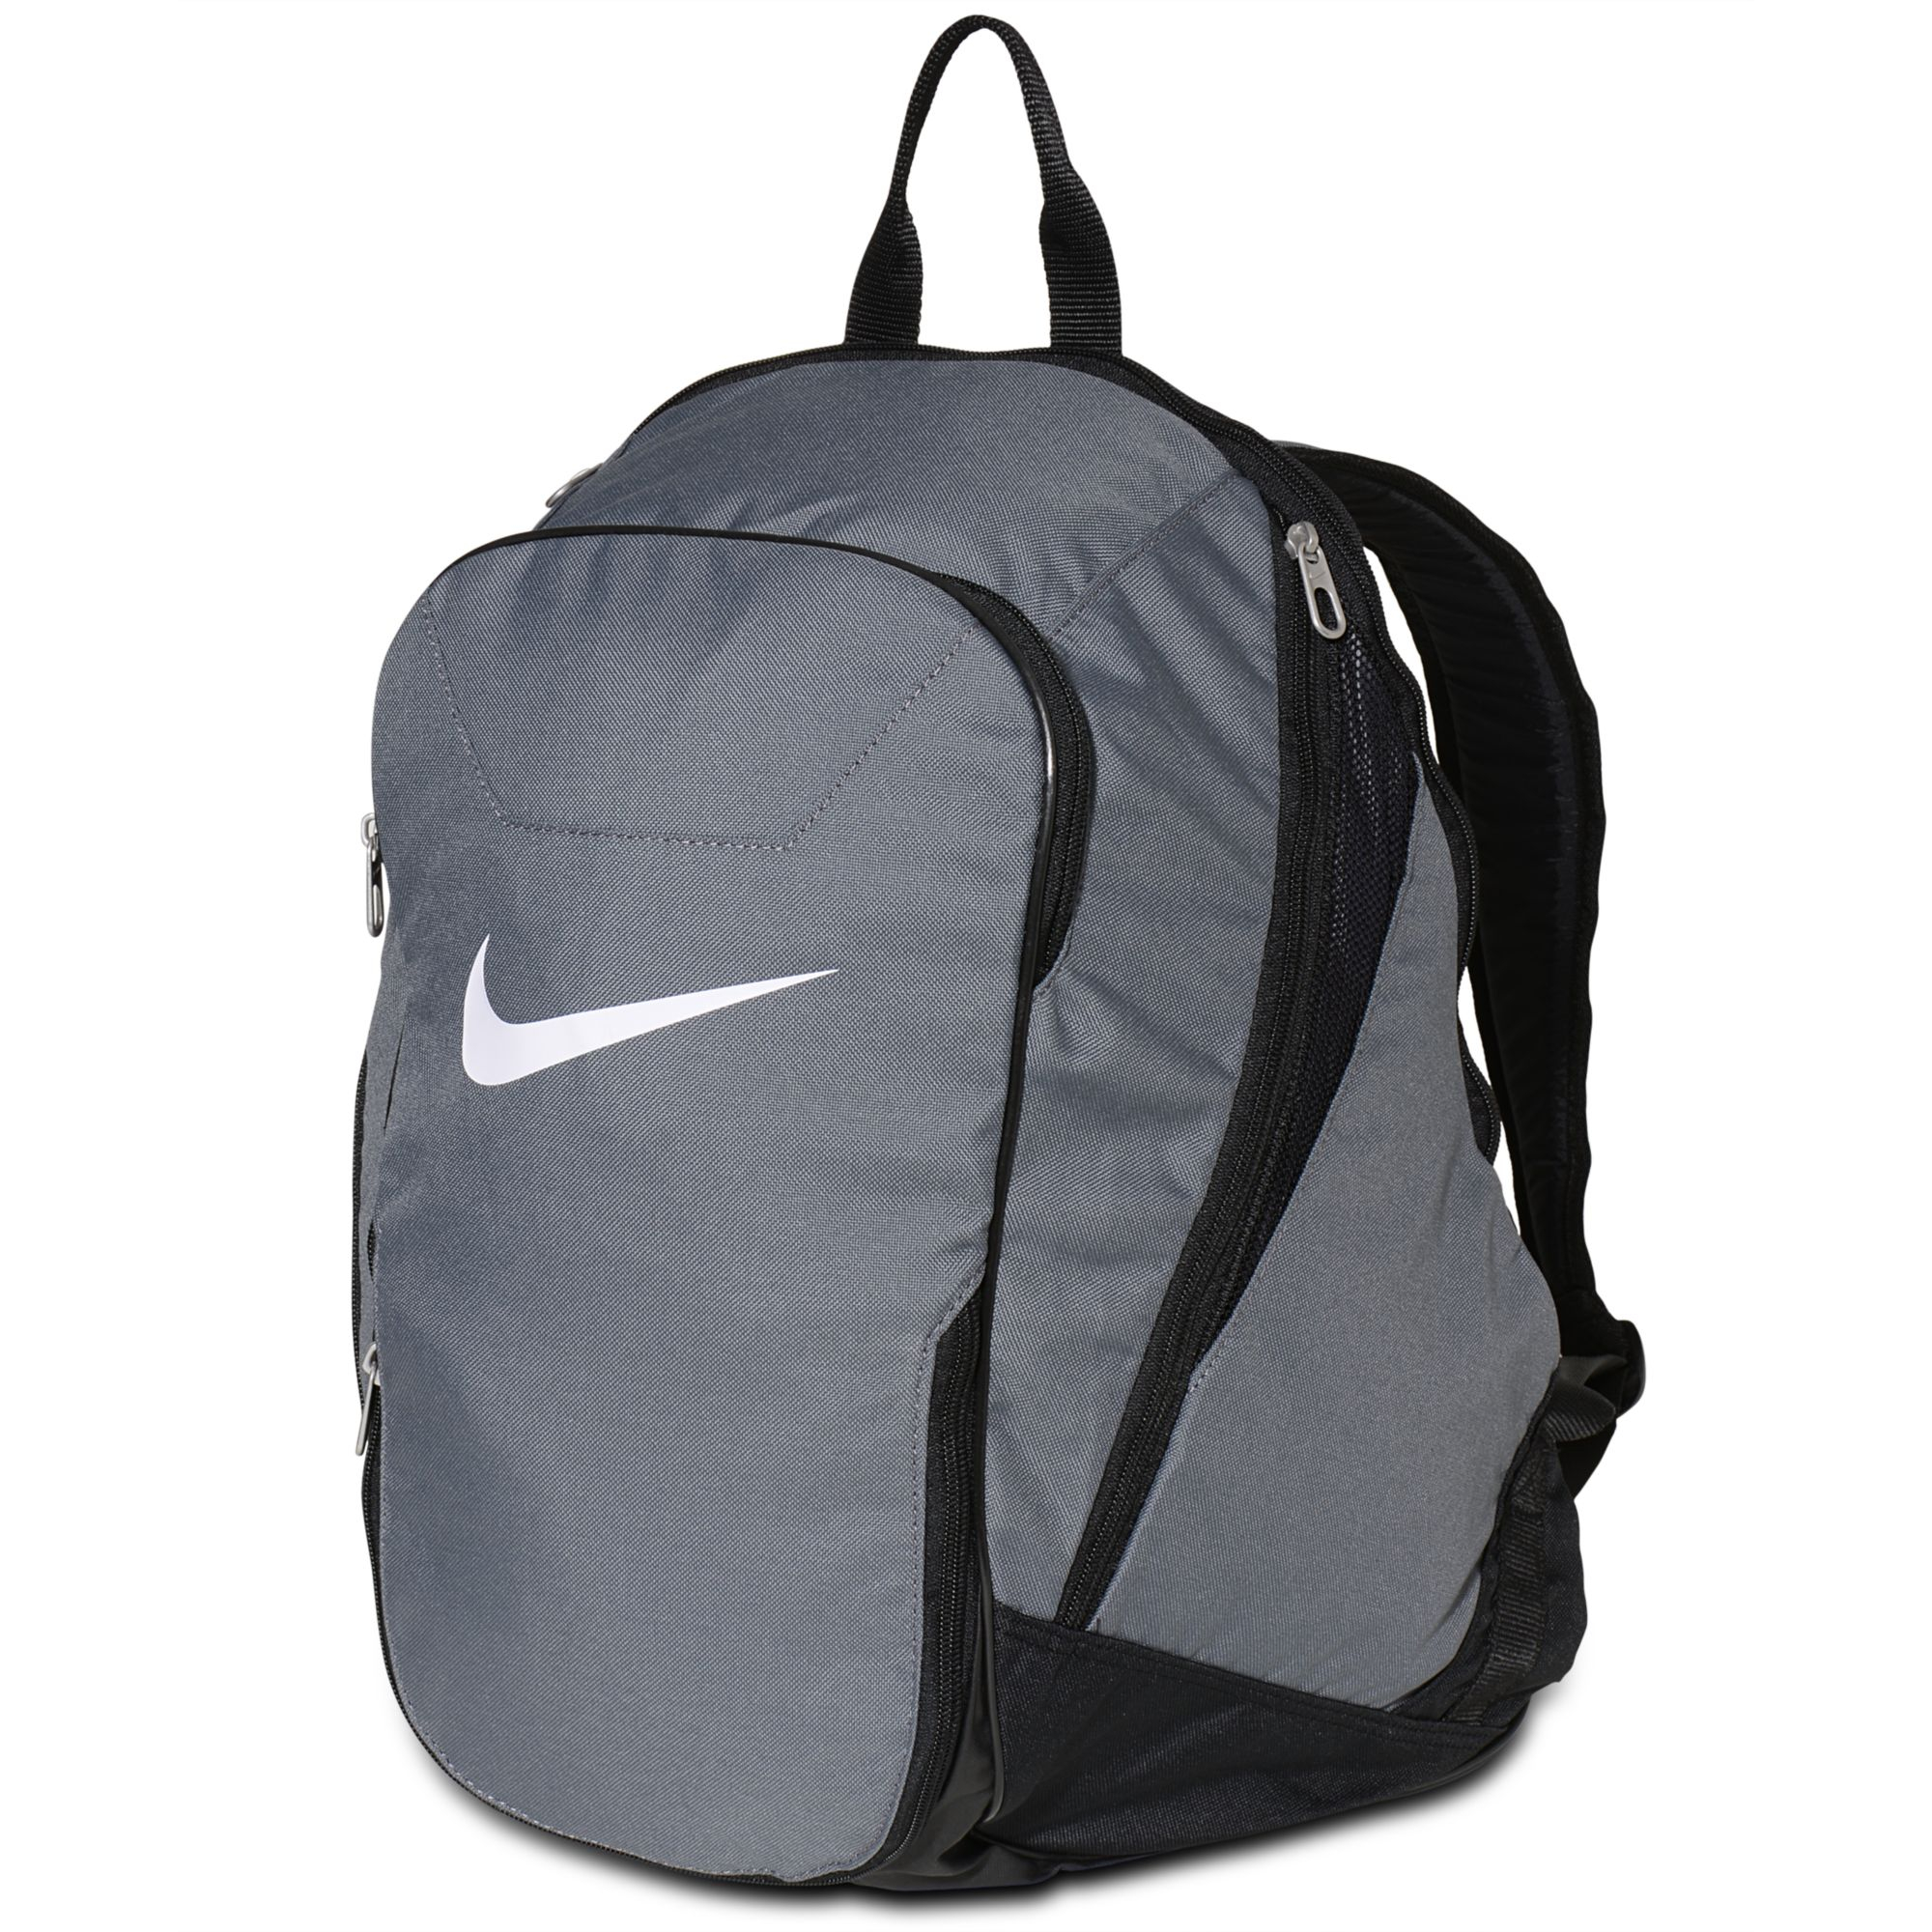 Nike Club Team Soccer Backpack in Flint Grey (Gray) for Men - Lyst